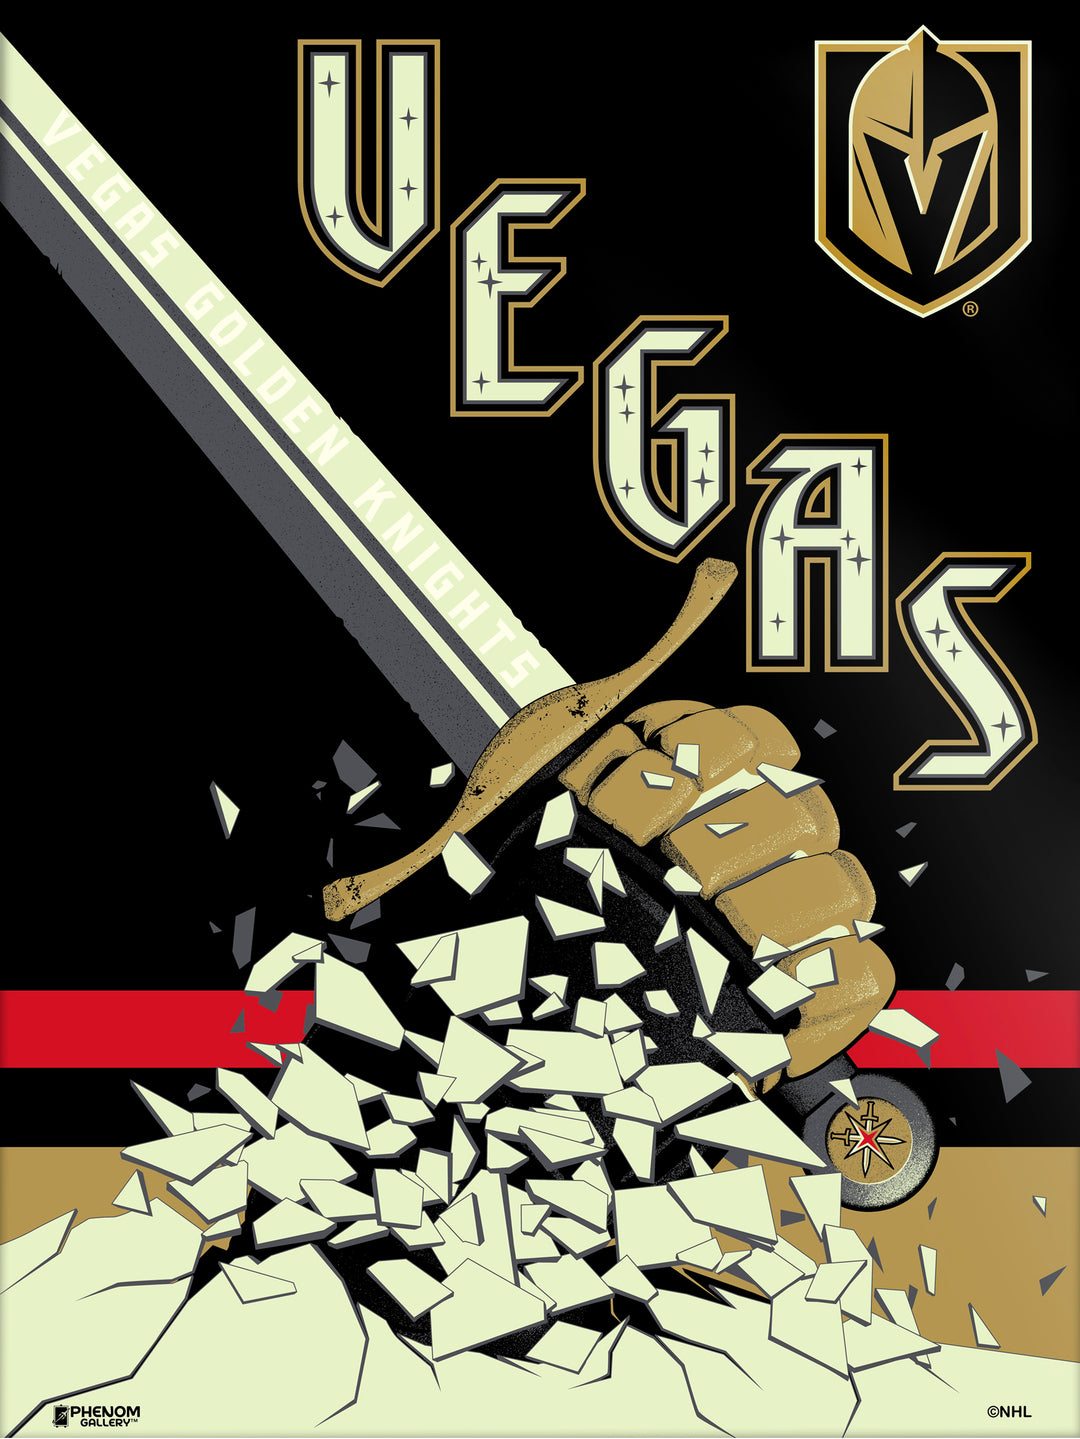 Blank Vegas Golden Knights Reverse Retro Jersey - Athletic Knit LAV763C